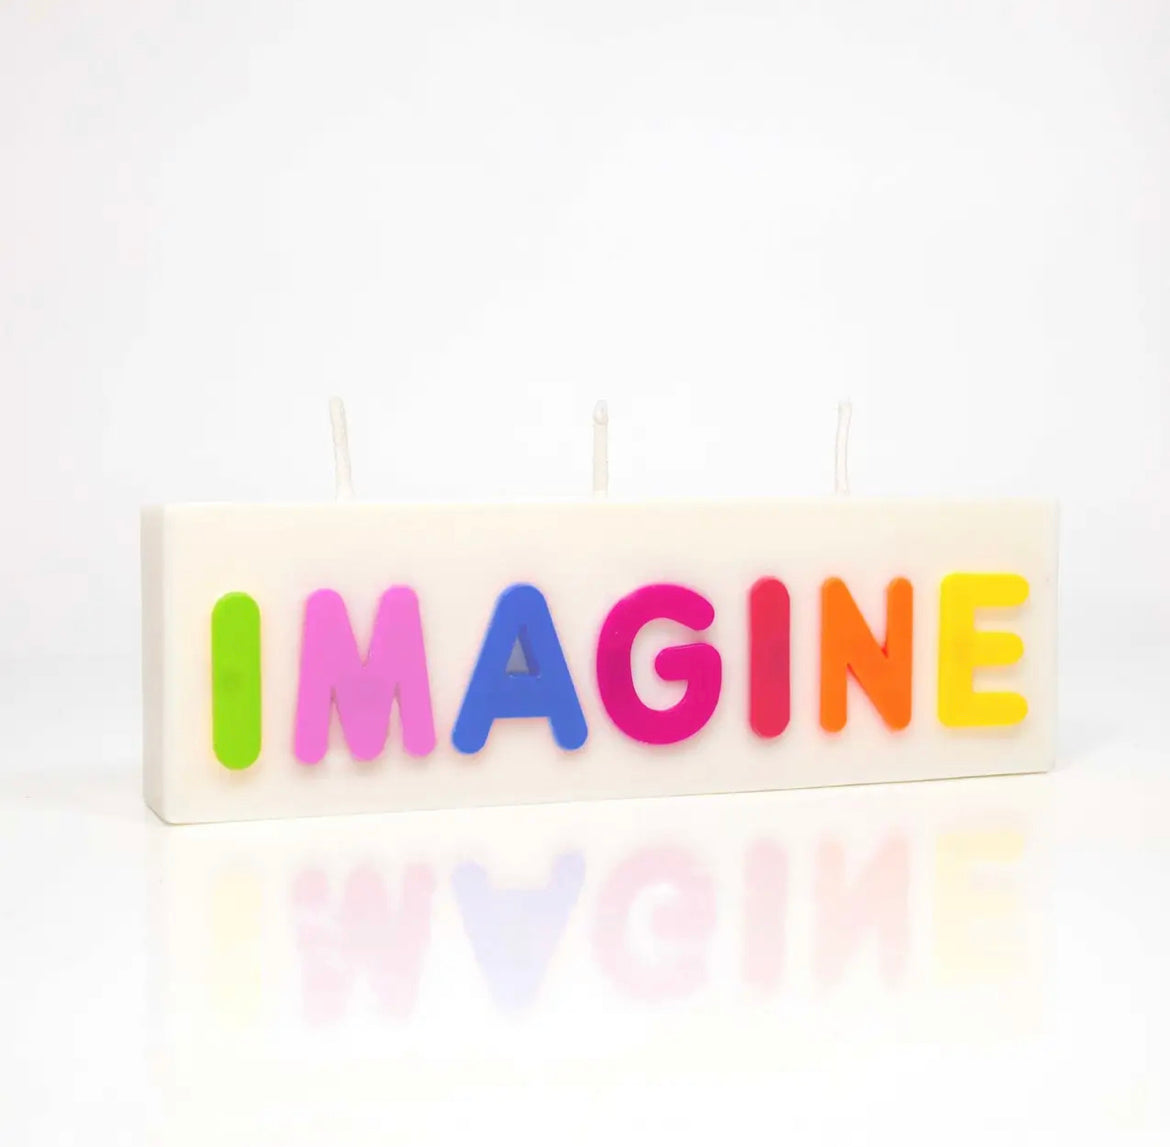 Imagine Candle